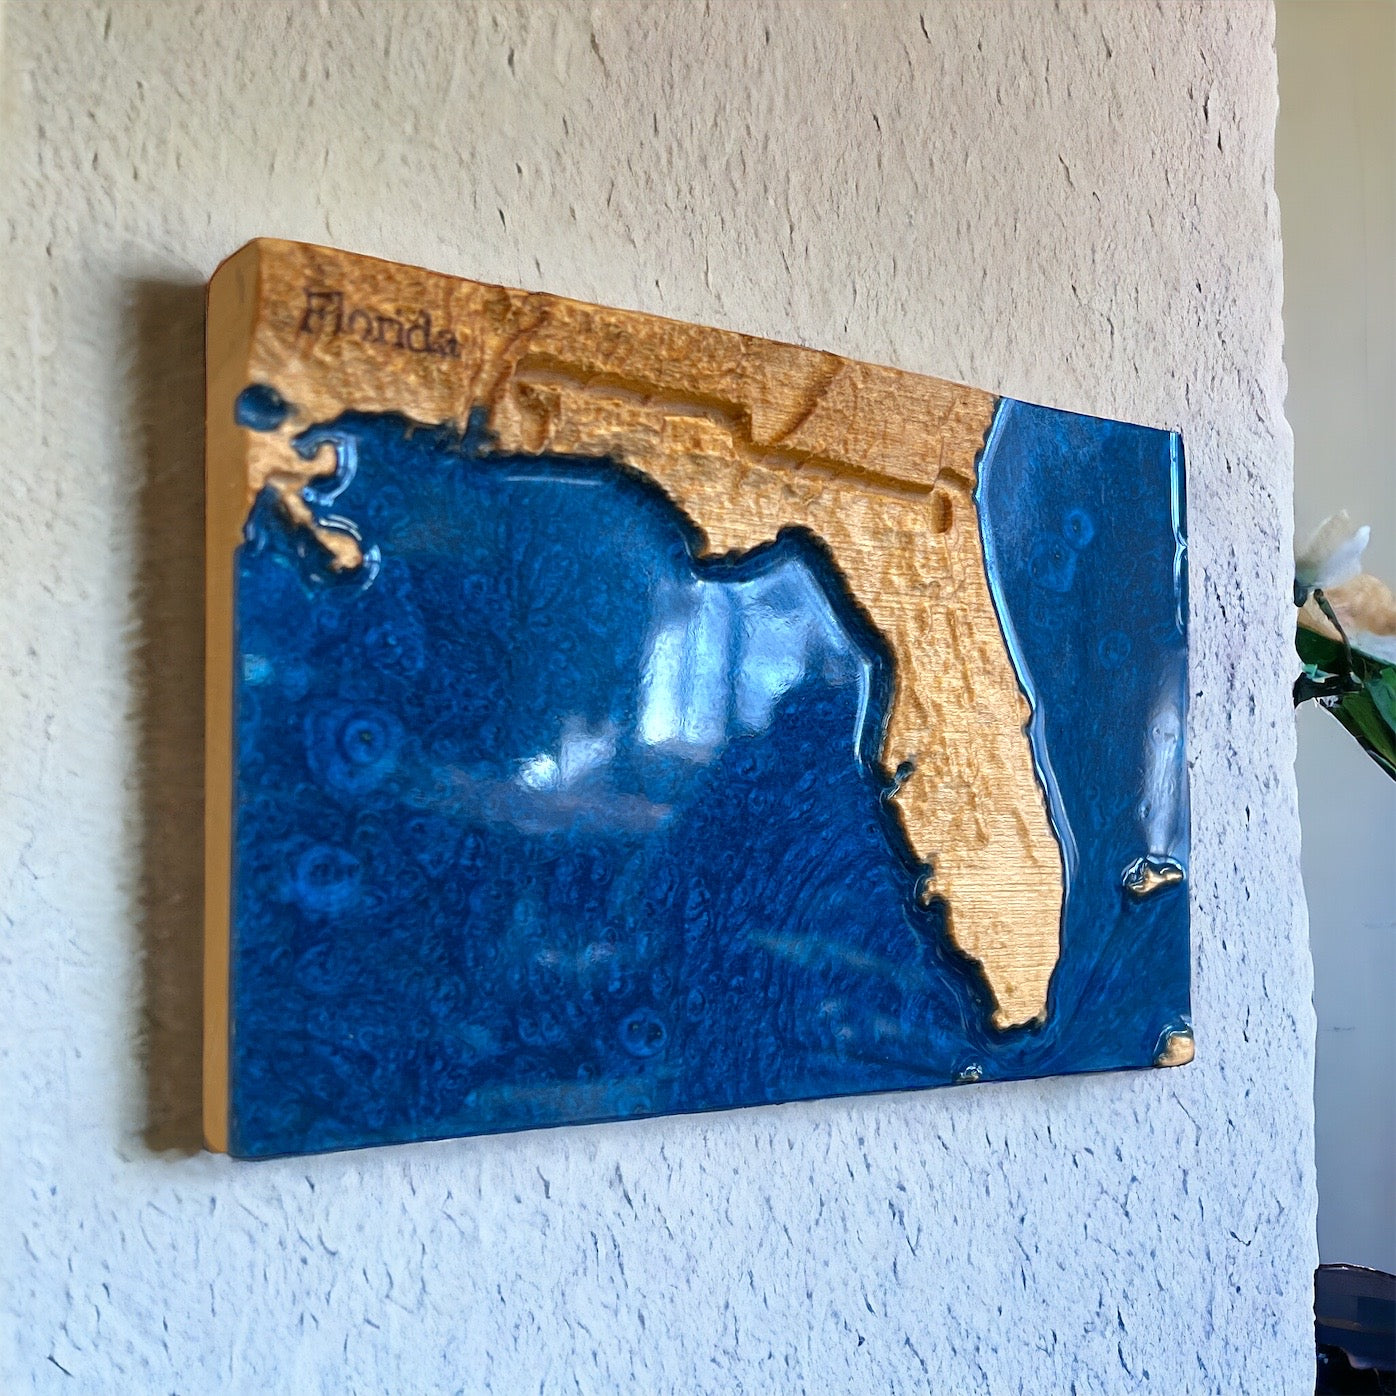 Florida Wall Decor | 3D Relief Map | Unique Wedding Birthday Housewarming Anniversary Gift | Beach Coast Outdoors | FL Gifts